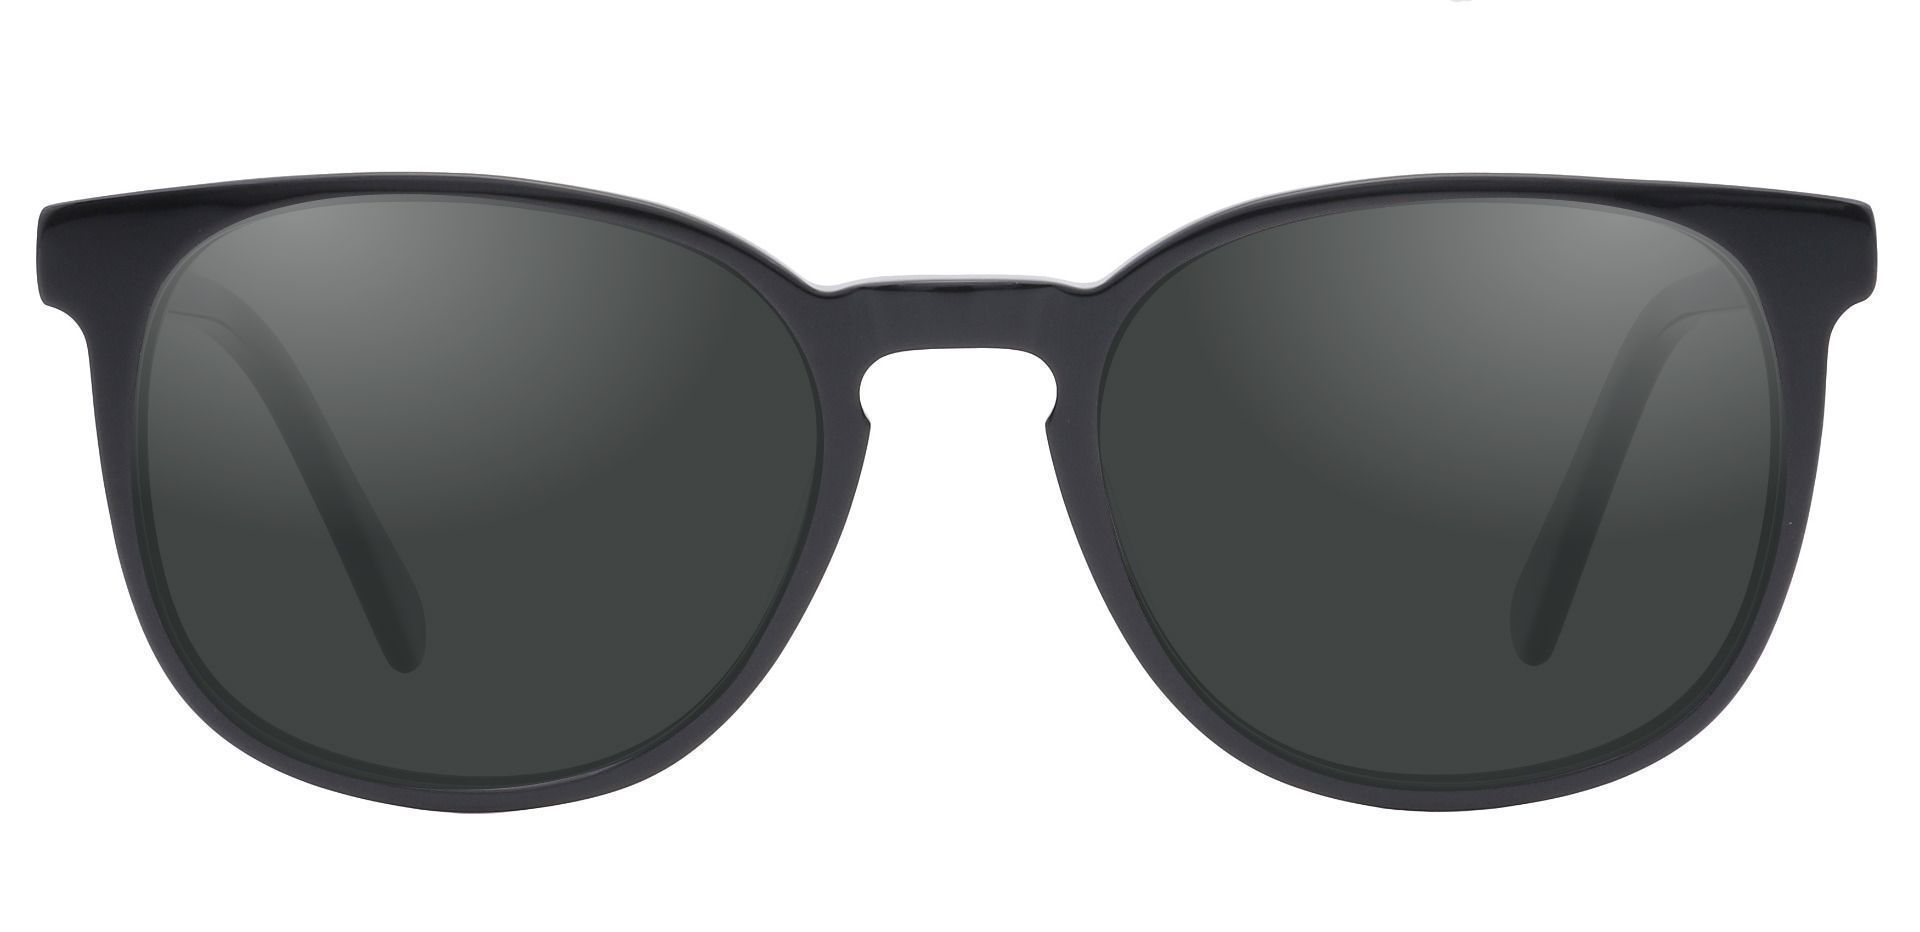 Nebula Round Non-Rx Sunglasses - Black Frame With Gray Lenses